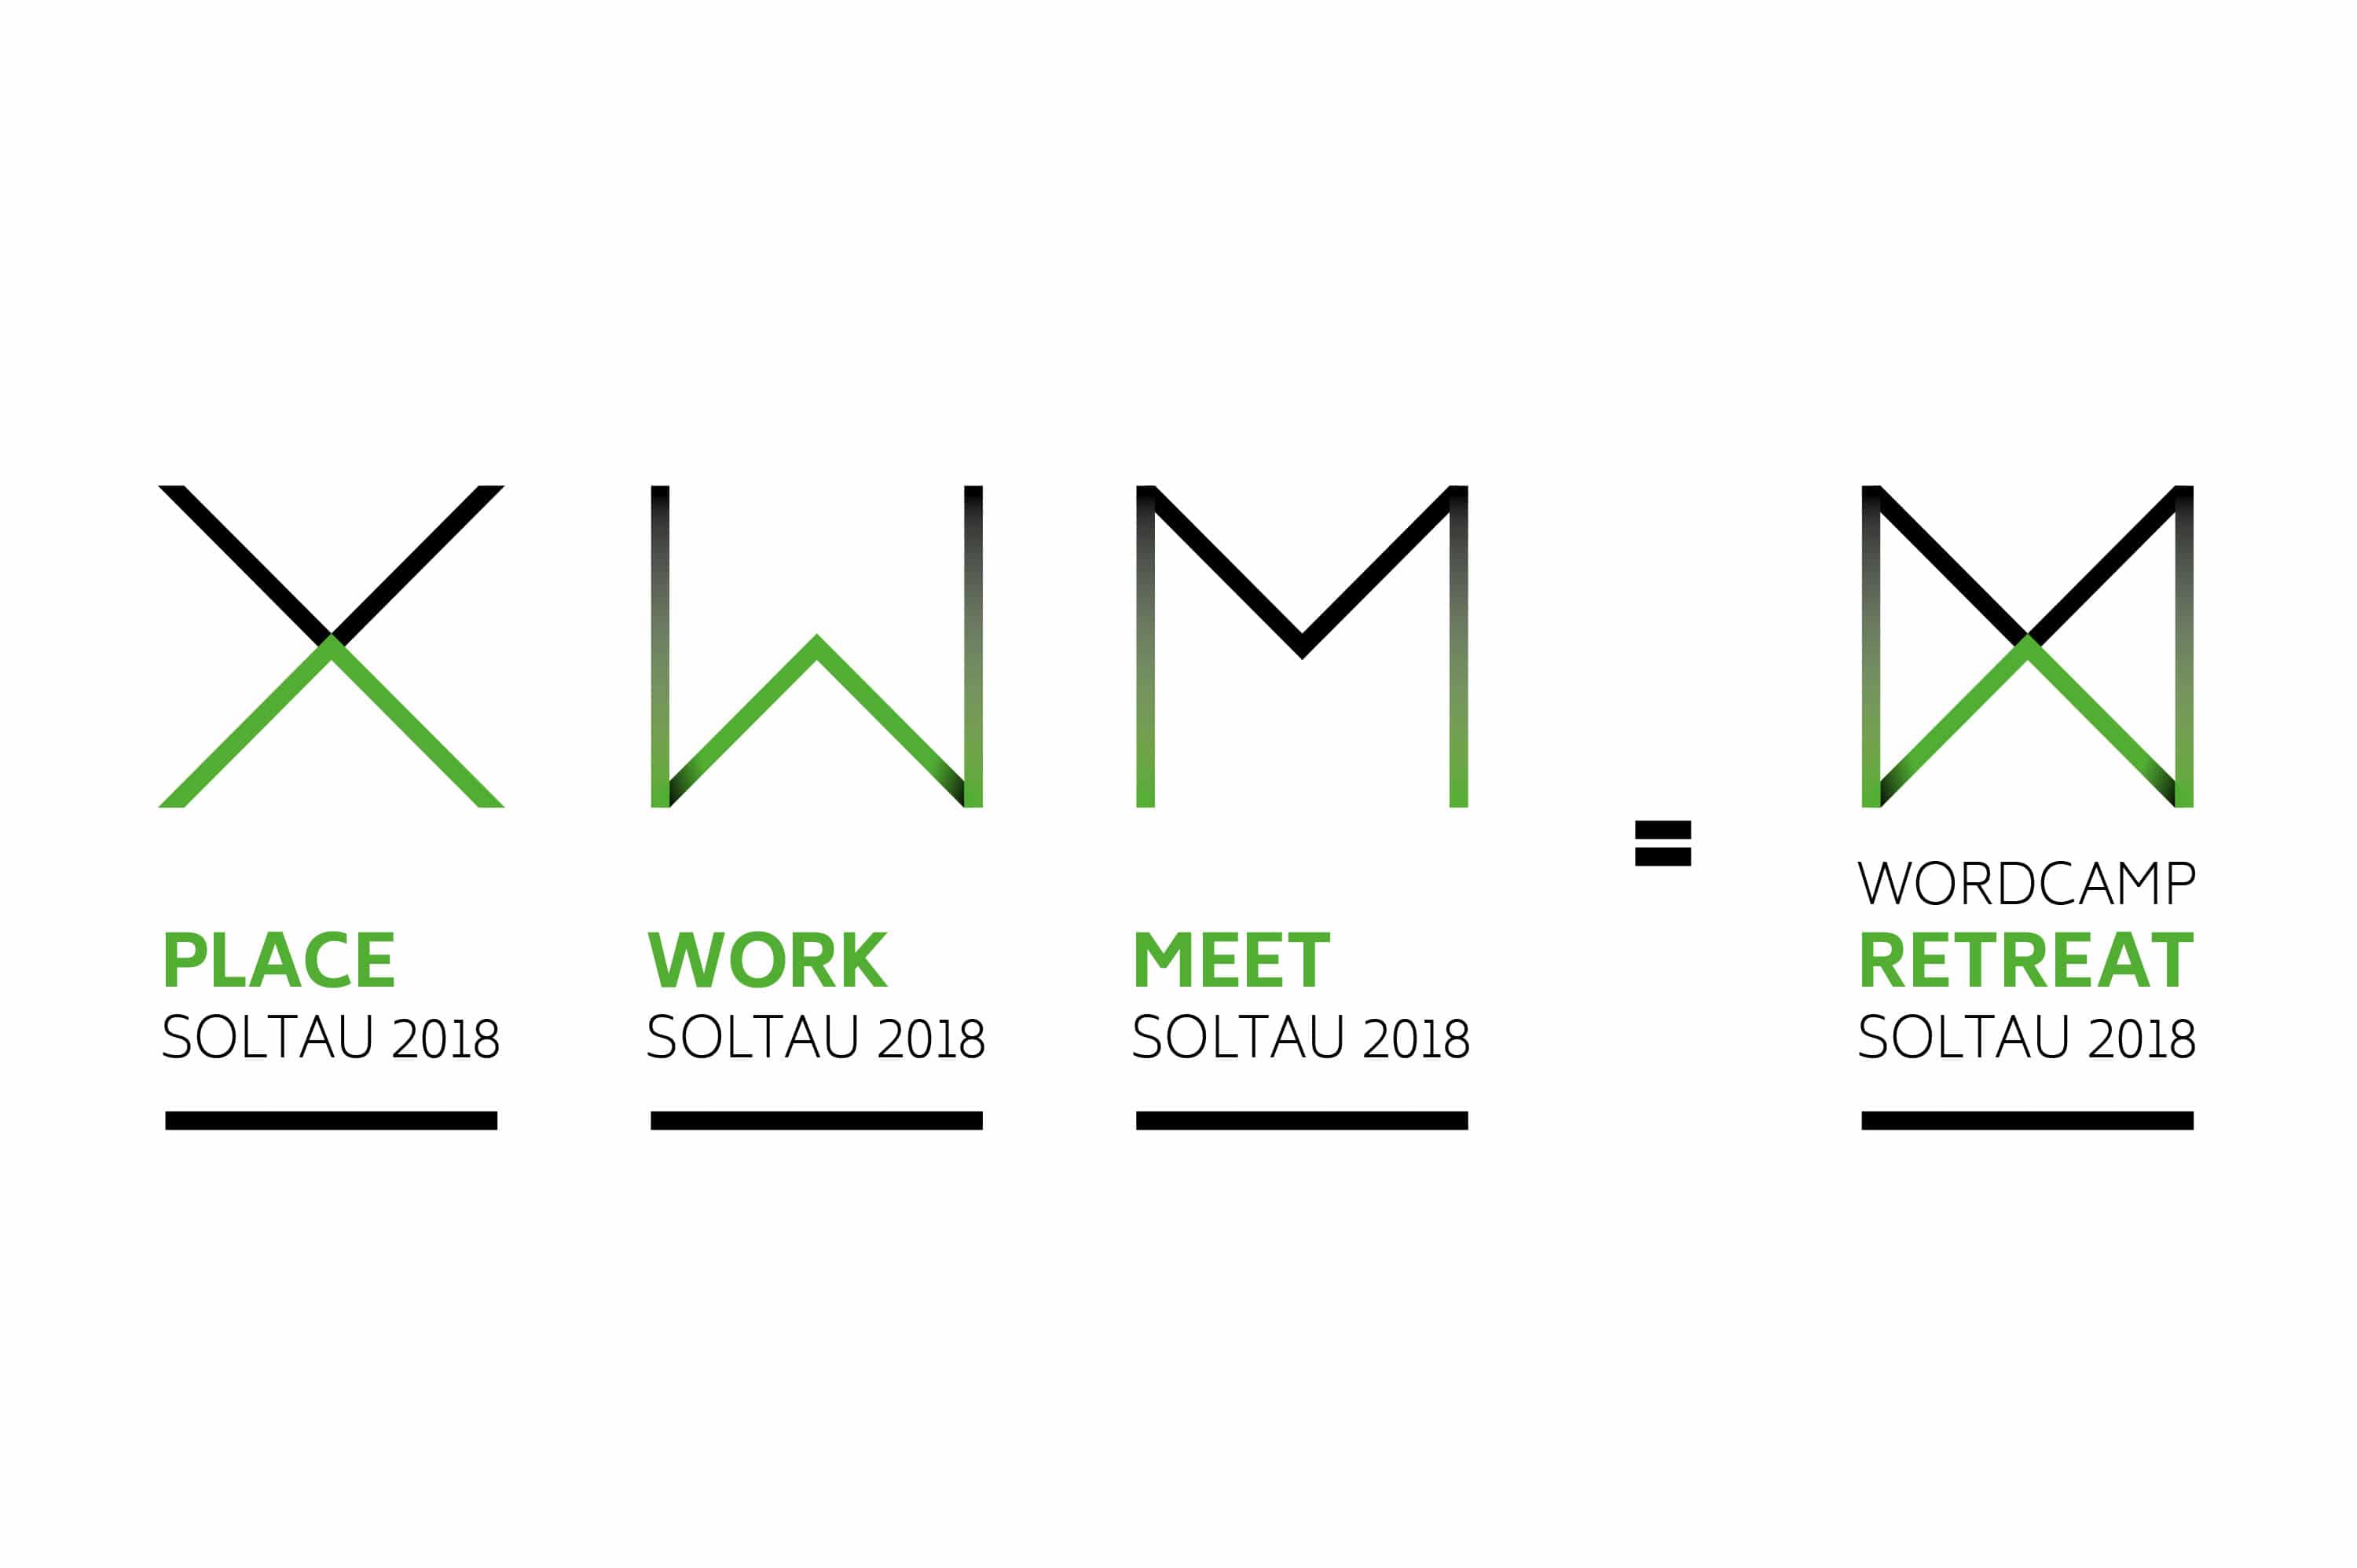 Das WordCamp Retreat Logo